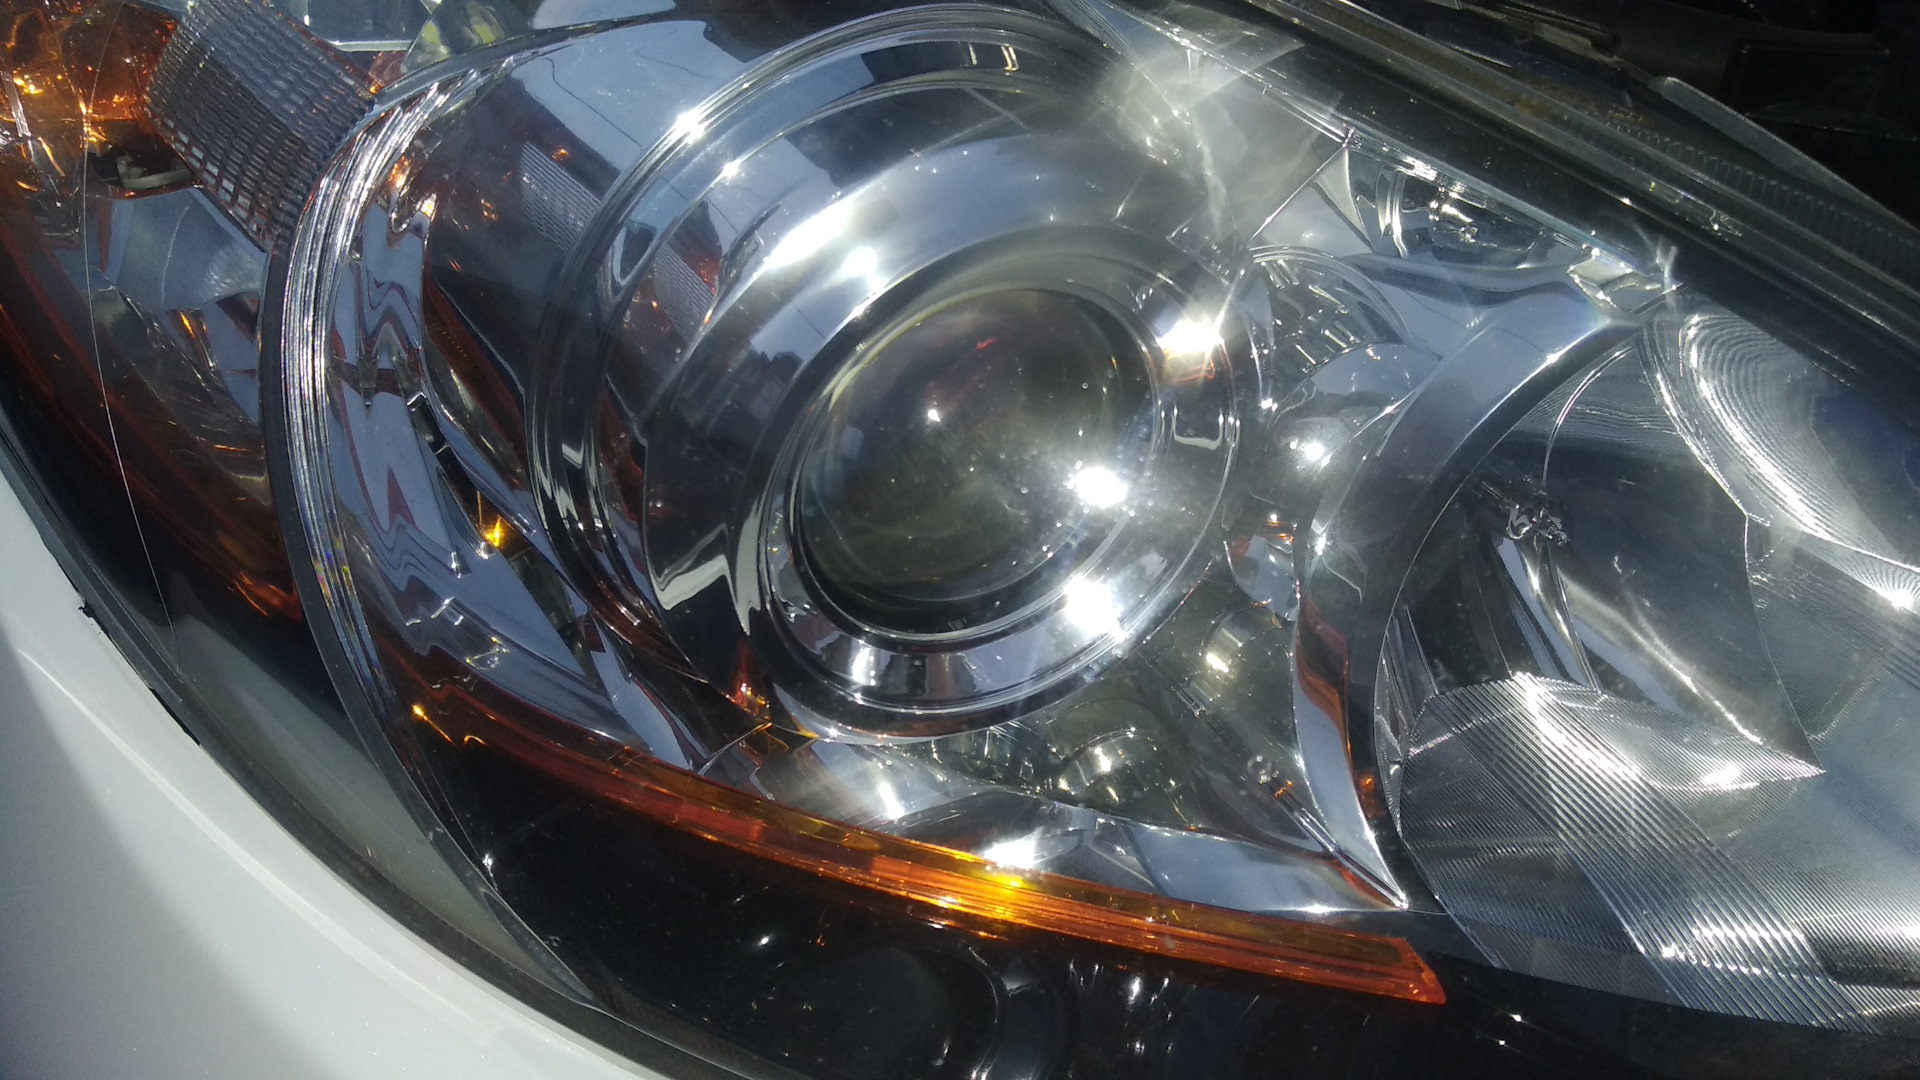 Фары ксенон Mazda 3 BL. Мазда 3 2012 галоген. Ксеноновые лампы на Мазда СХ 5. Headlight Tuning Mazda 3. Мазда 3 лампочки ближнего света